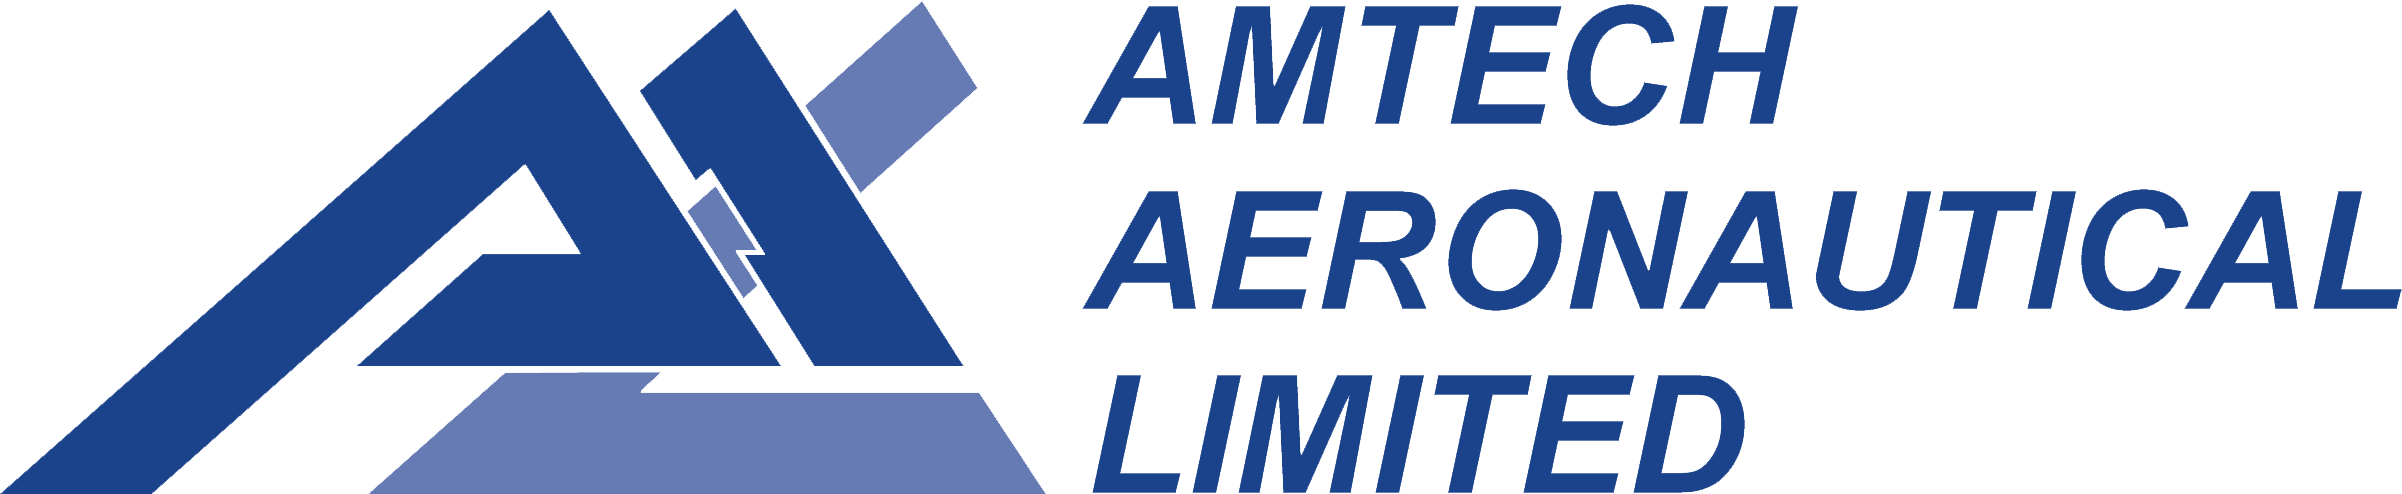 Amtech Aeronautical Logo